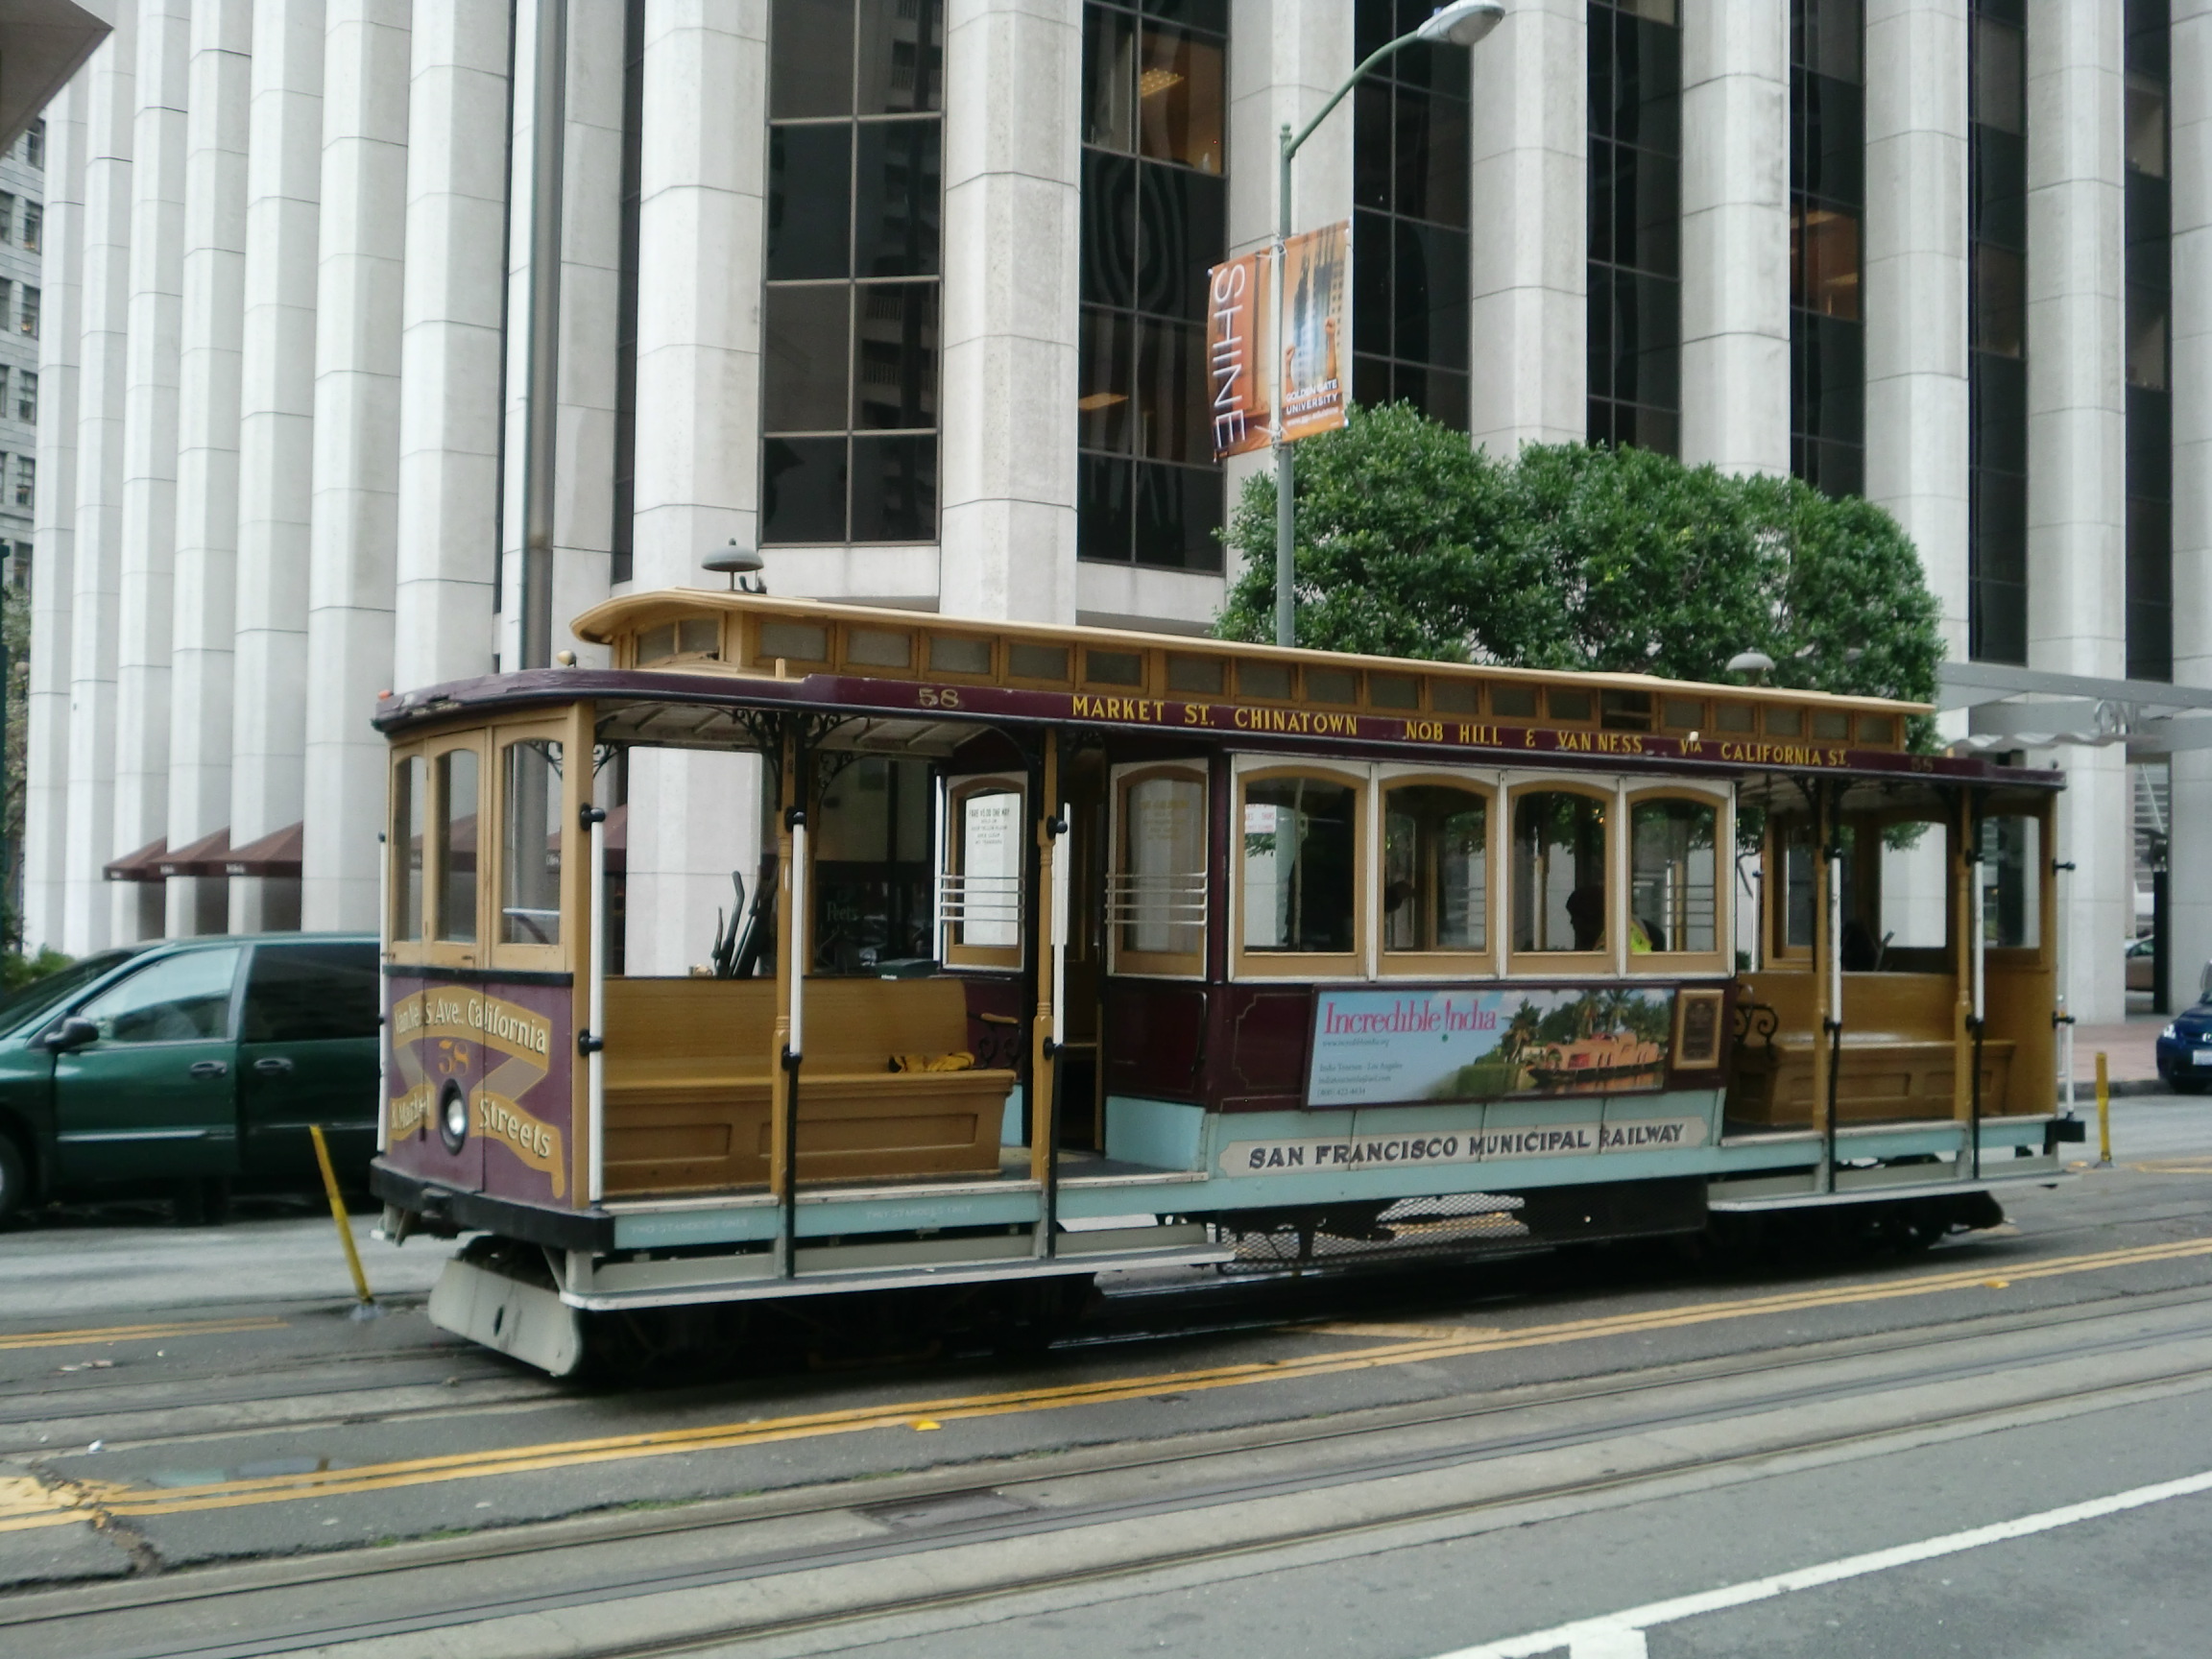 Канатный трамвай. Трамвай в Сан-Франциско. Фуникулер Сан Франциско. Канатный трамвай Сан-Франциско. Санфранциска конатные рамваи.